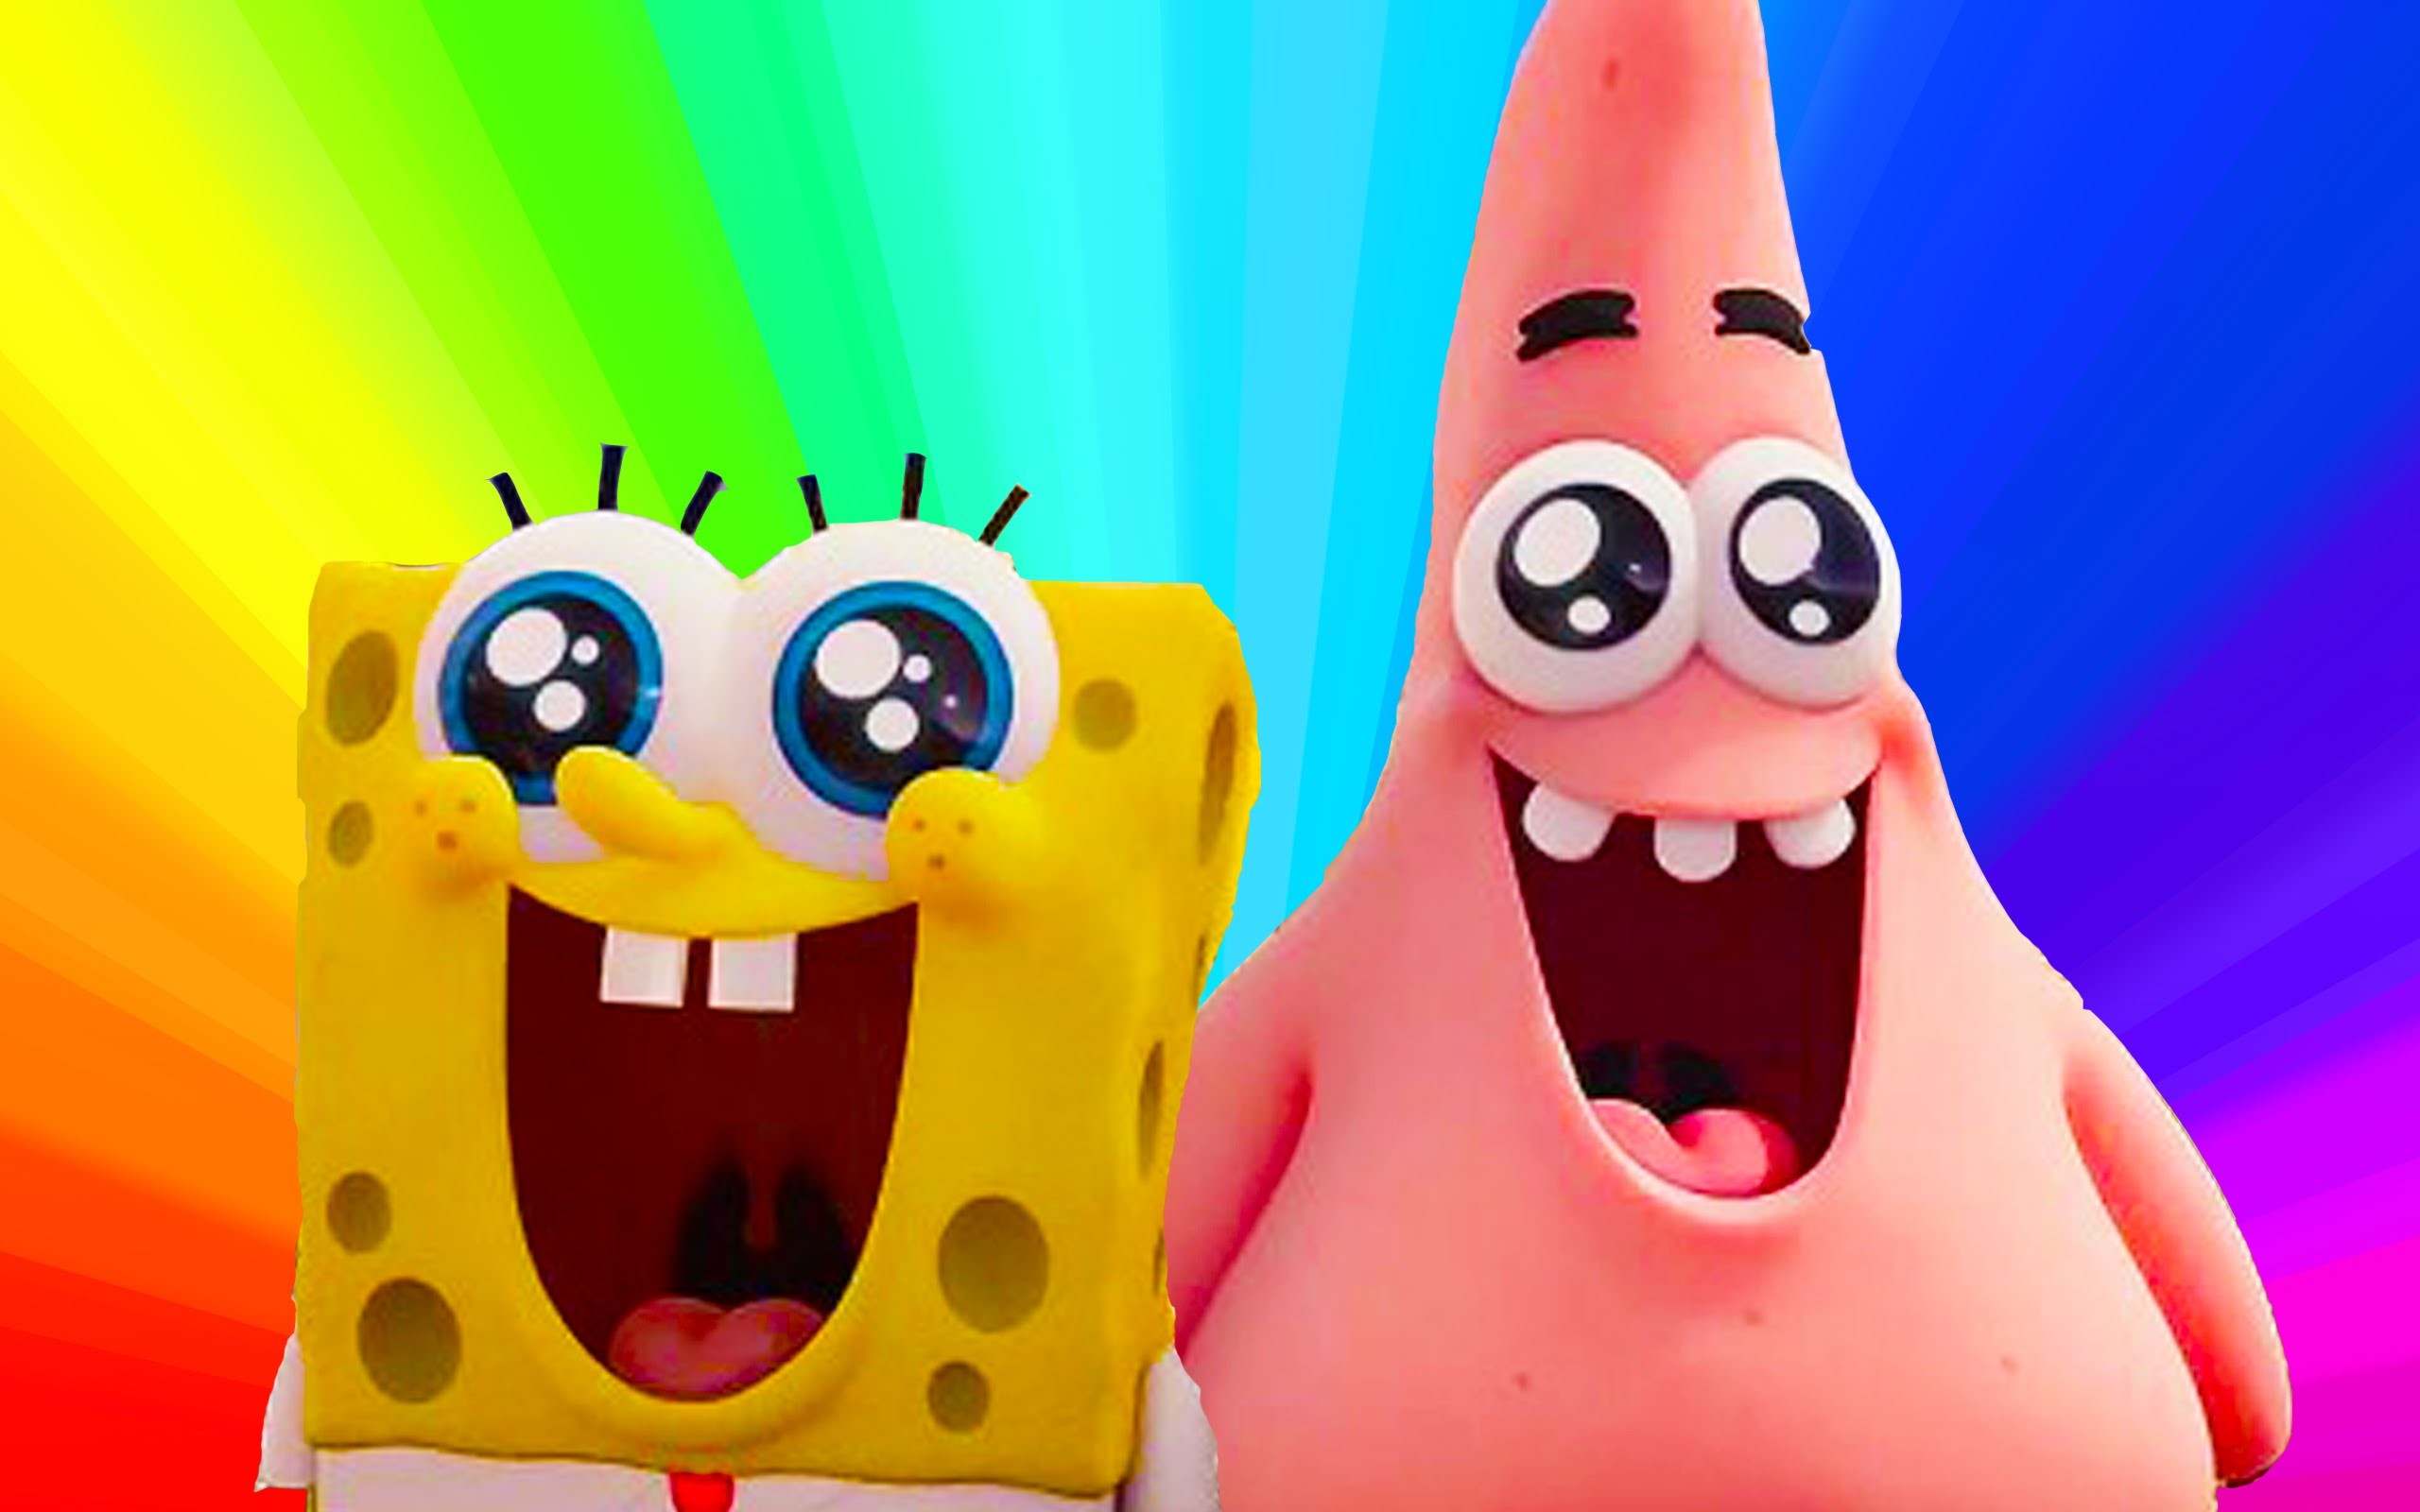 2560x1600 Meet Spongebob & Patrick Star, Easy Play doh creation for kids - YouTube